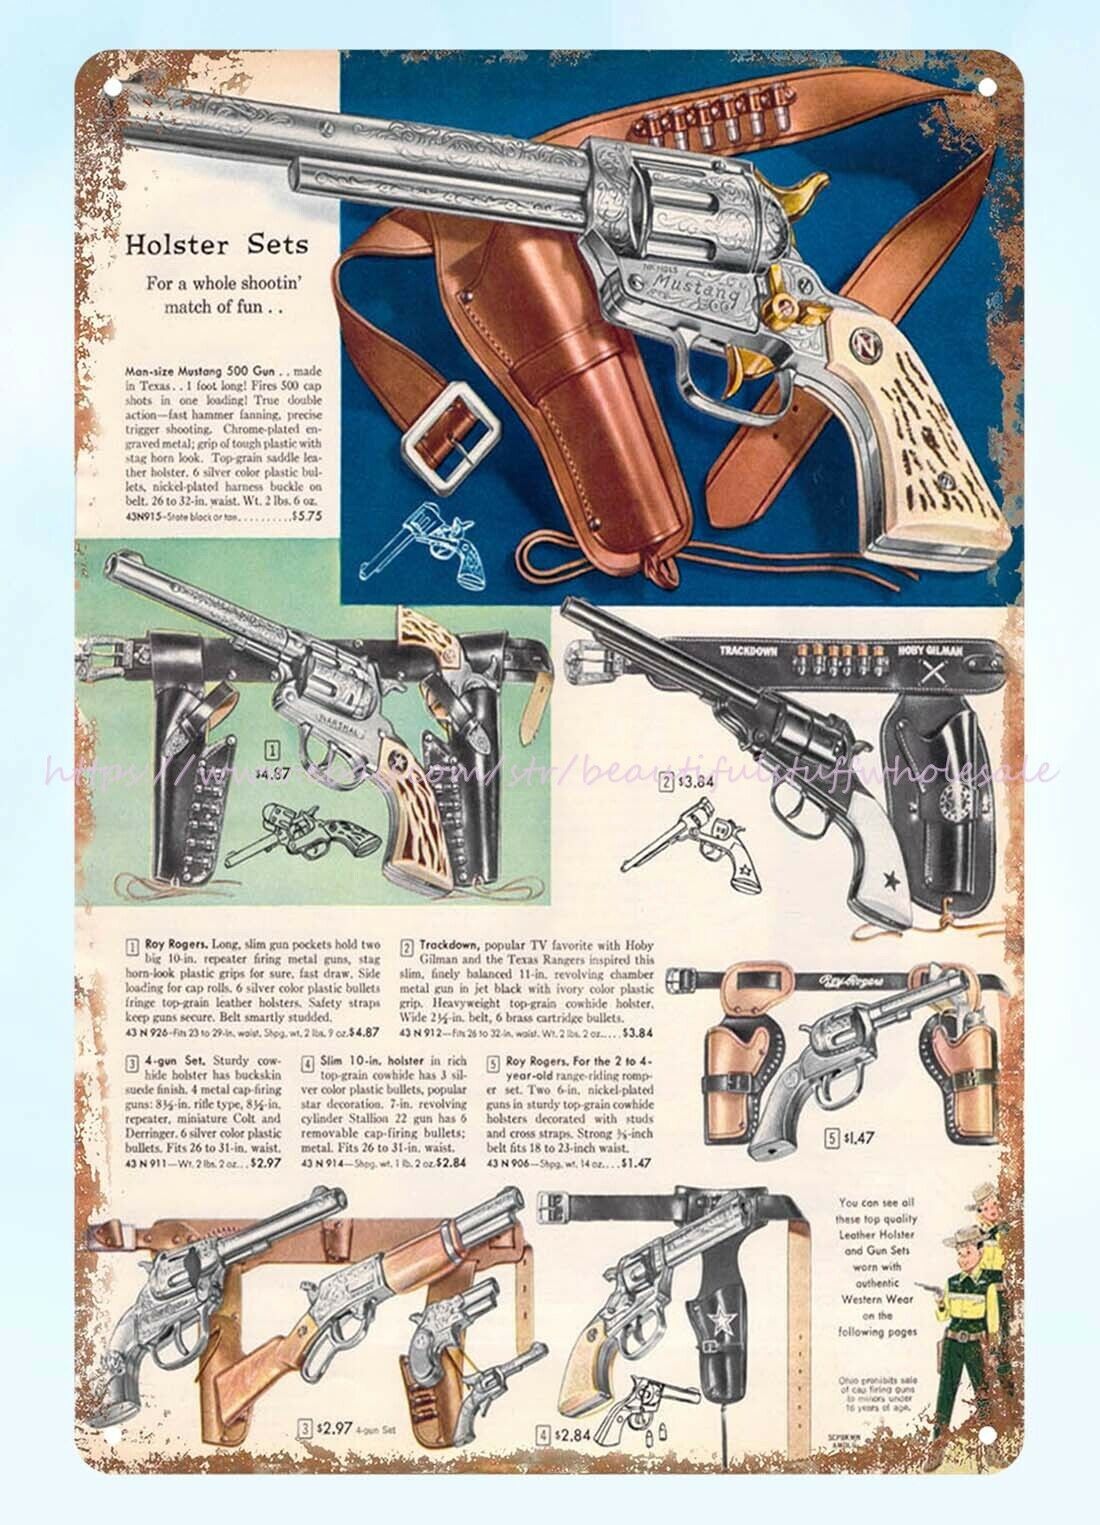 1959 Sears Christmas wish kids toy gun holster sets metal tin sign home decor